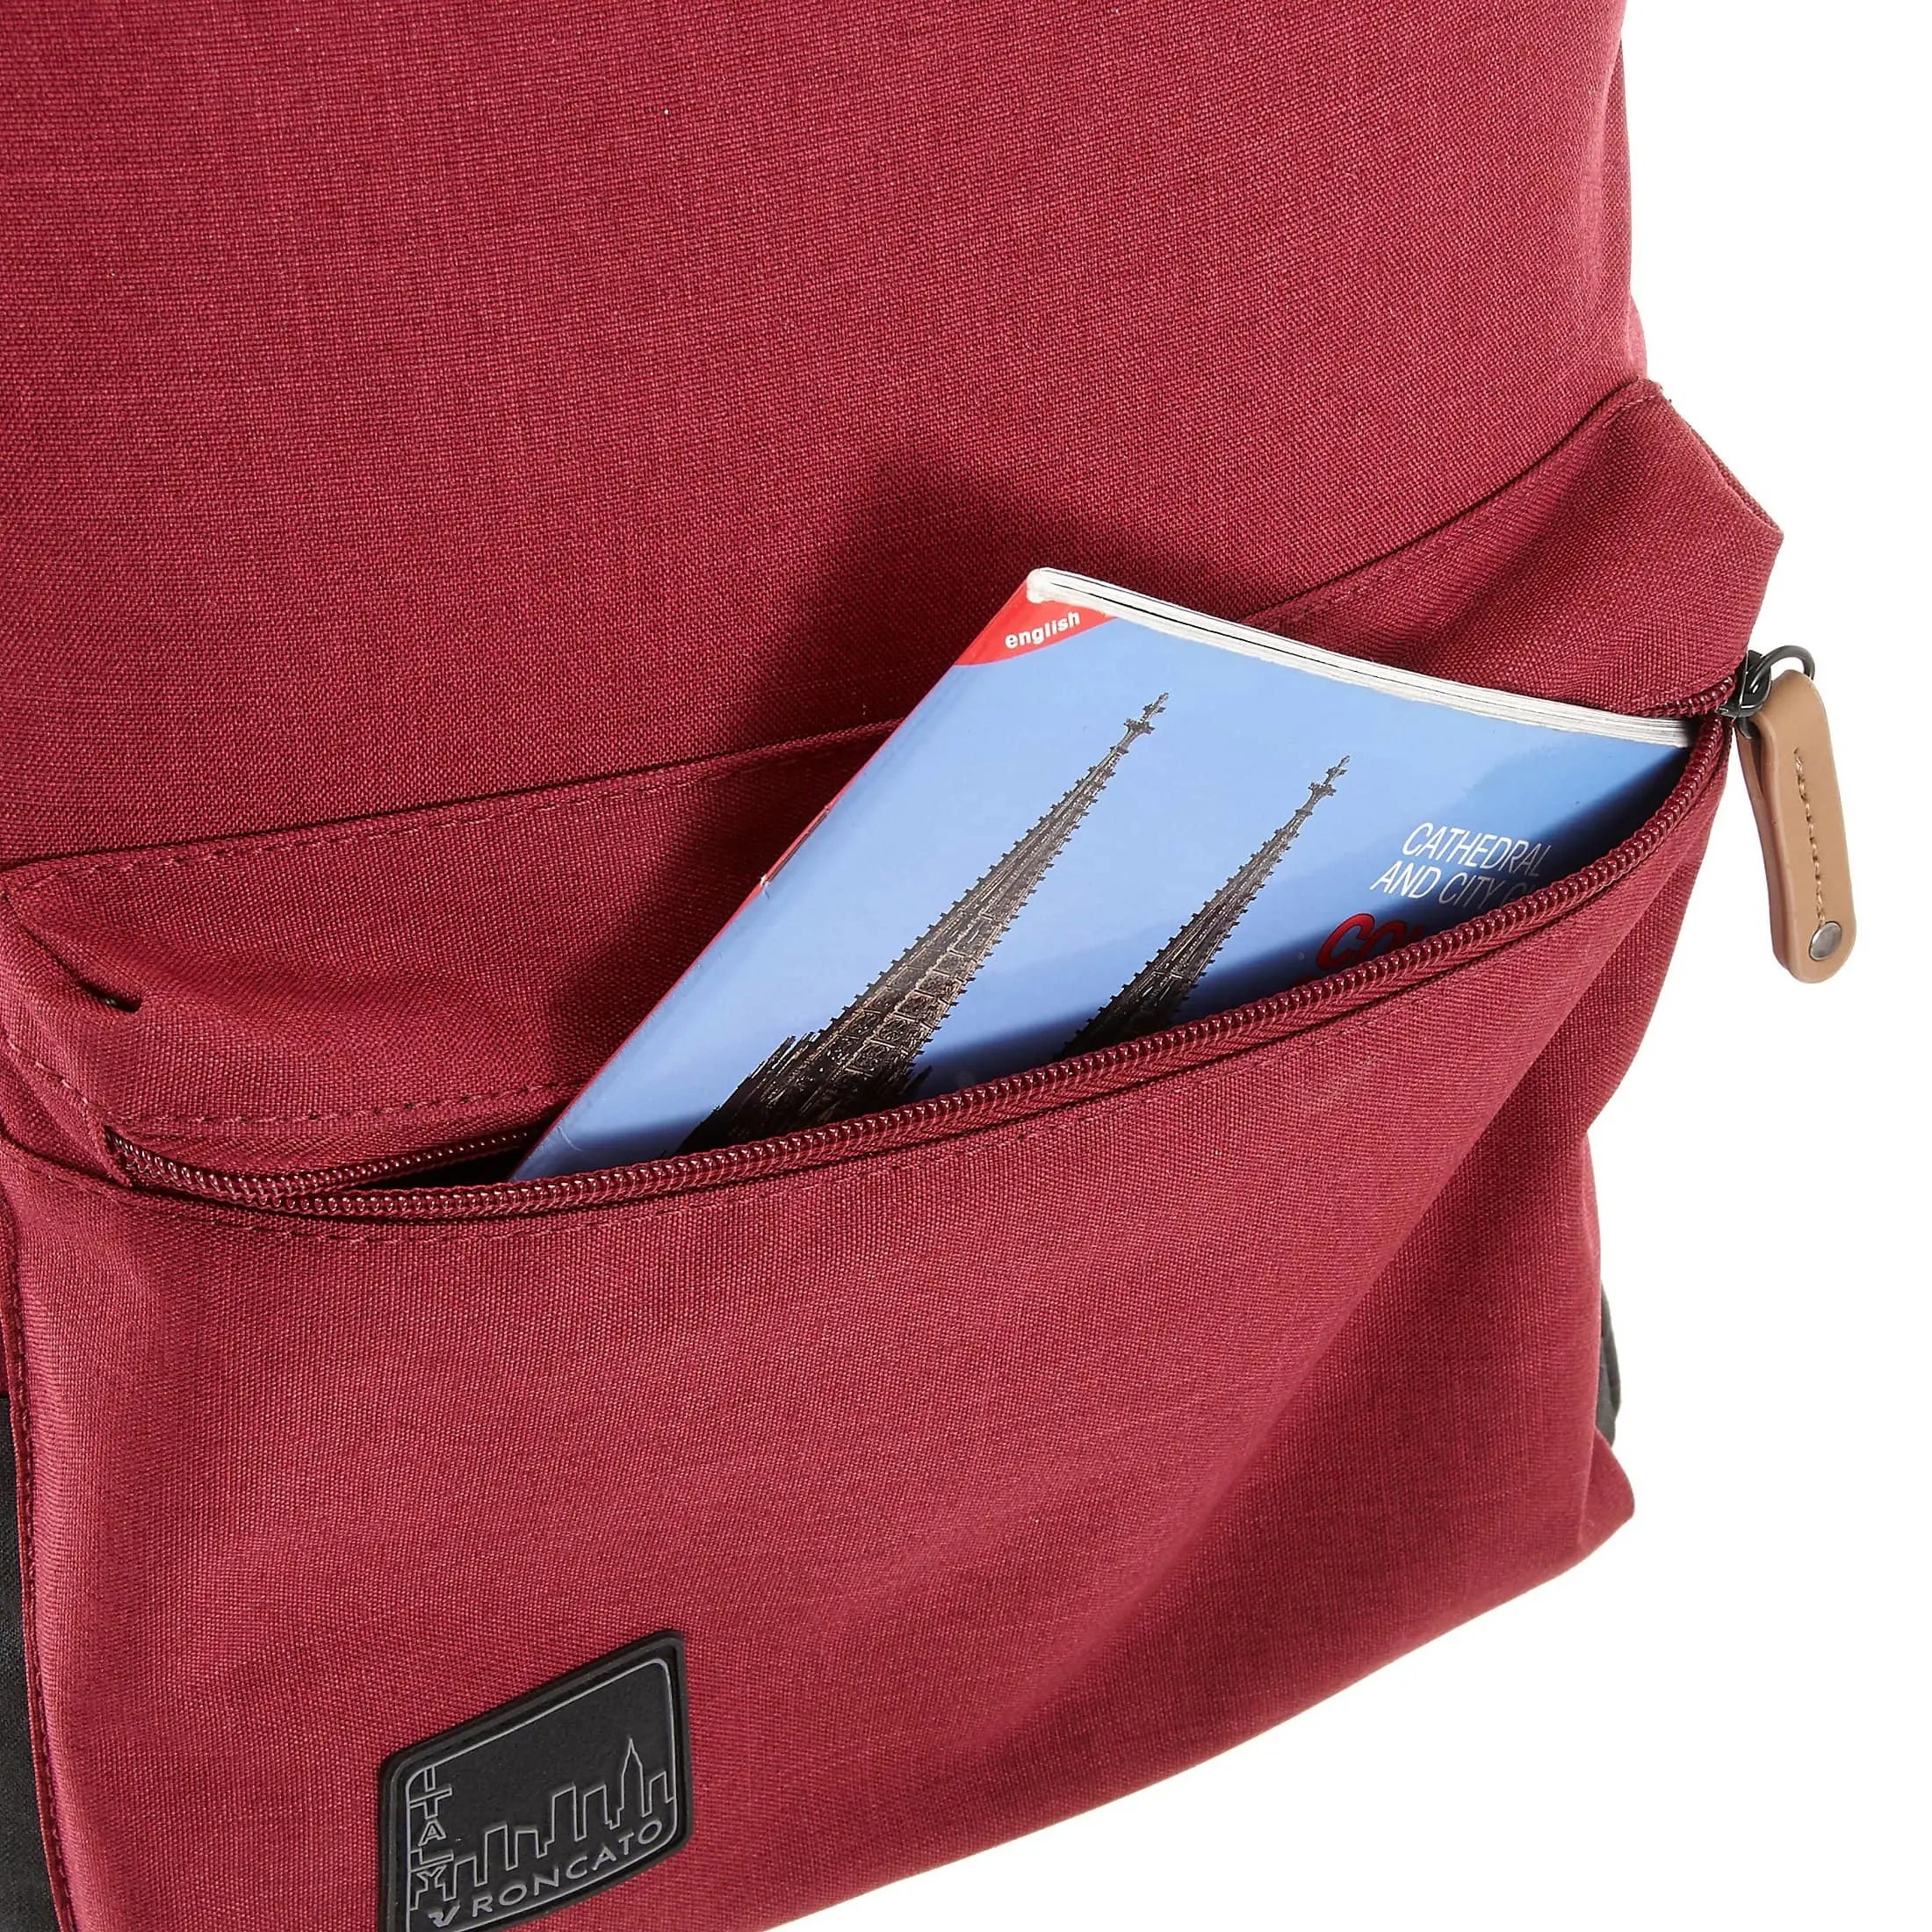 Roncato Adventure Rucksack mit Laptopfach 59 cm - red